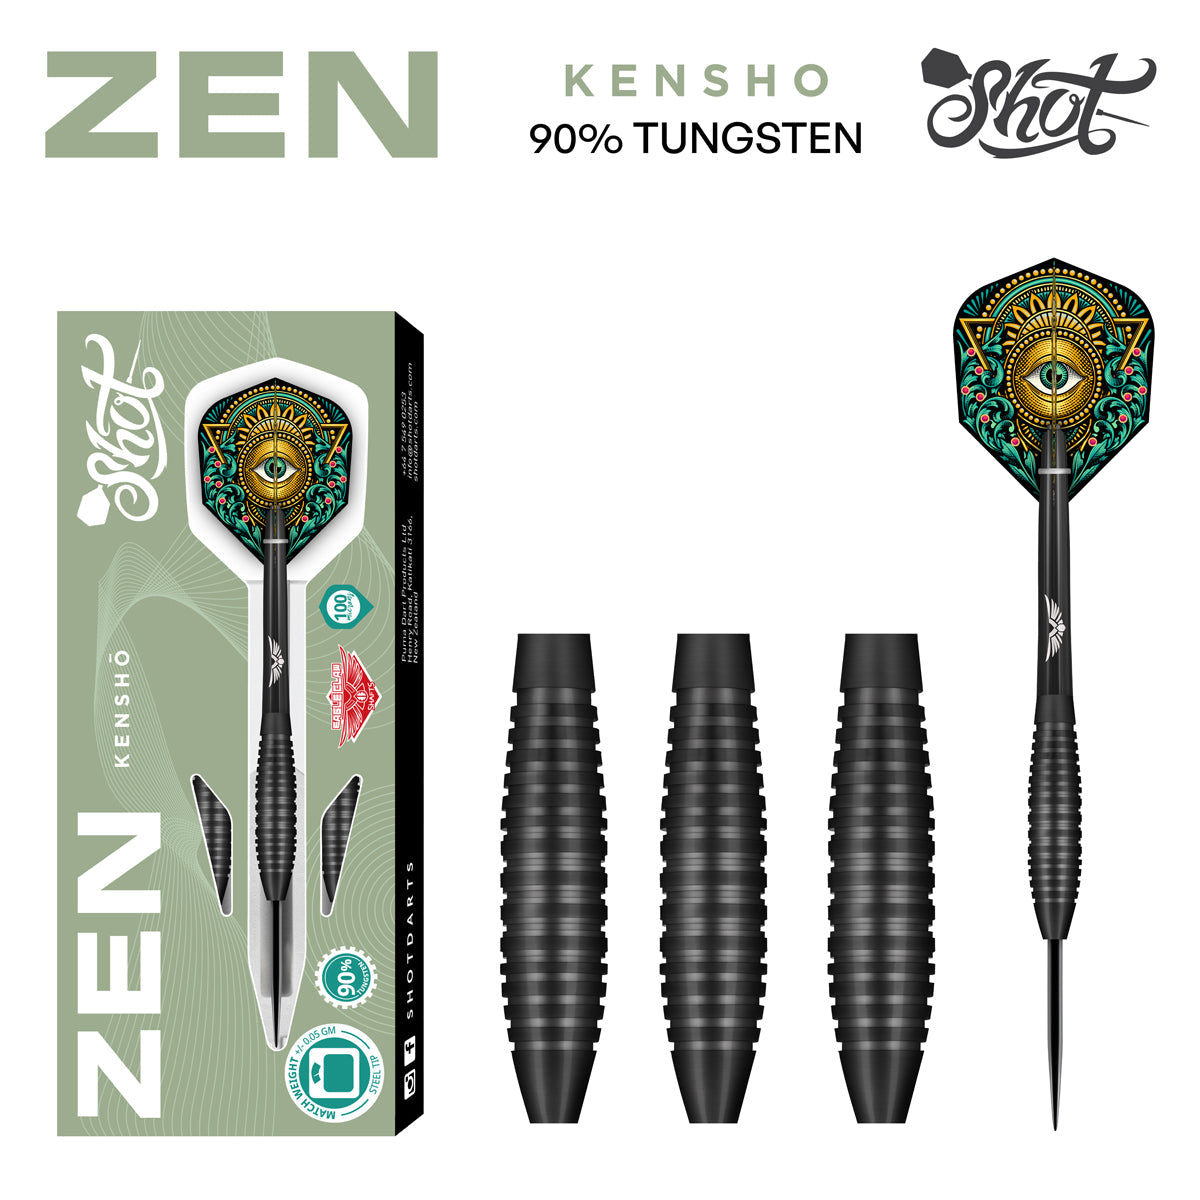 Shot Darts - Zen Kensho - 90% Tungsten - 24g